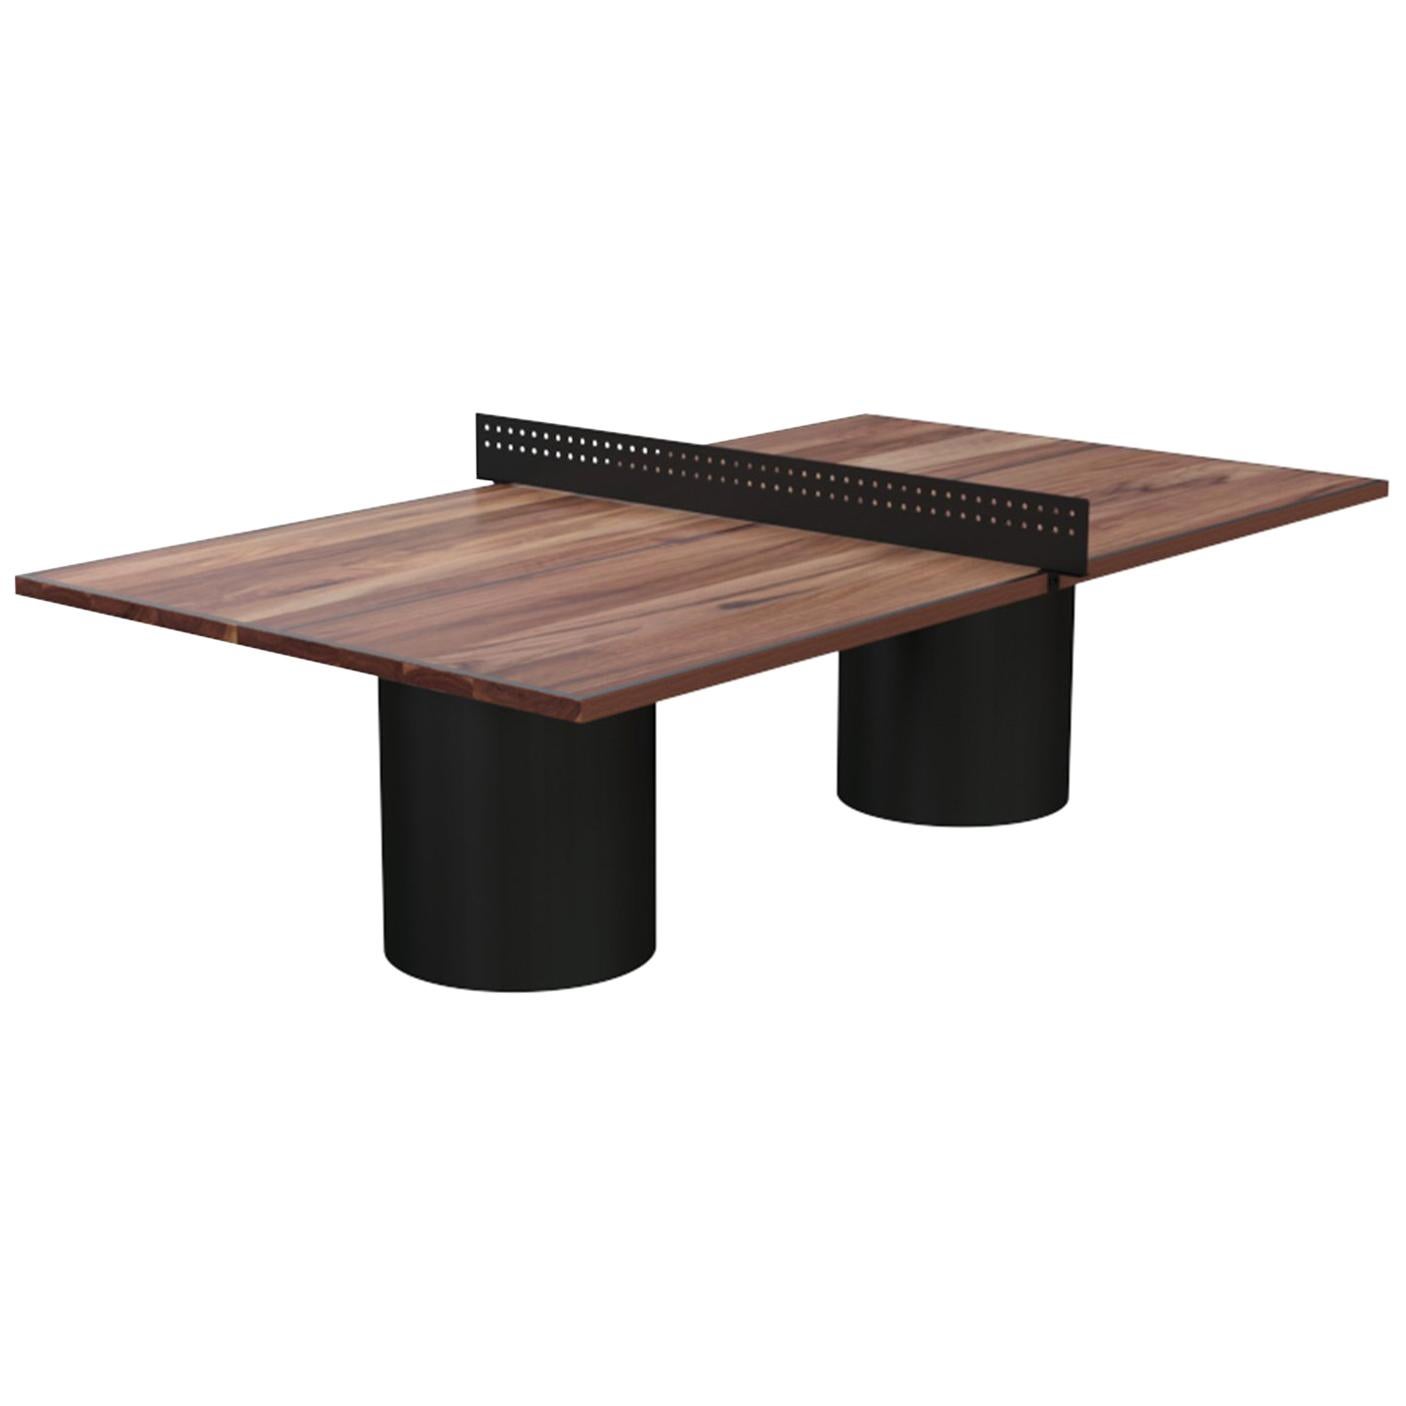 Customizable Modern "Column" Ping Pong Table